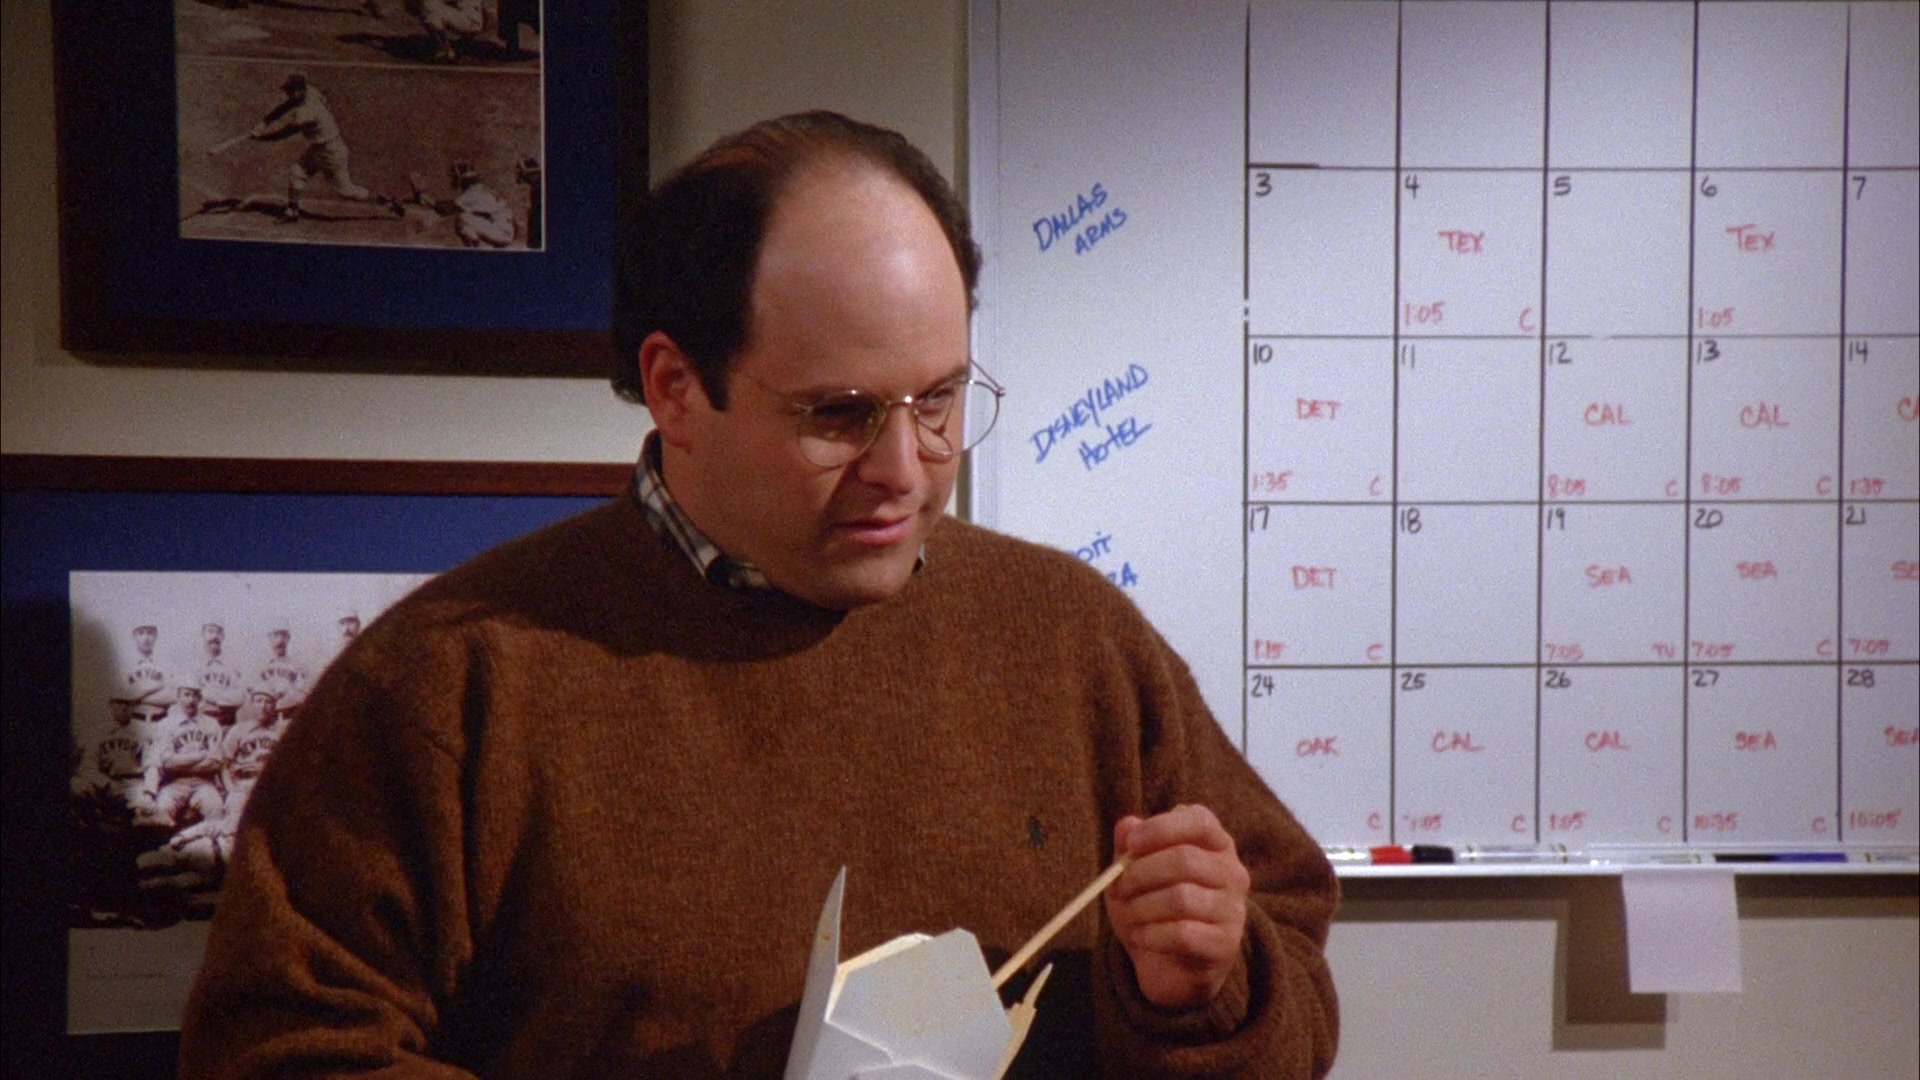 Ralph Lauren Knit Sweater For Men Worn By Jason Alexander As George Costanza In Seinfeld Season 6 Episode 9 The Secretary (1994)